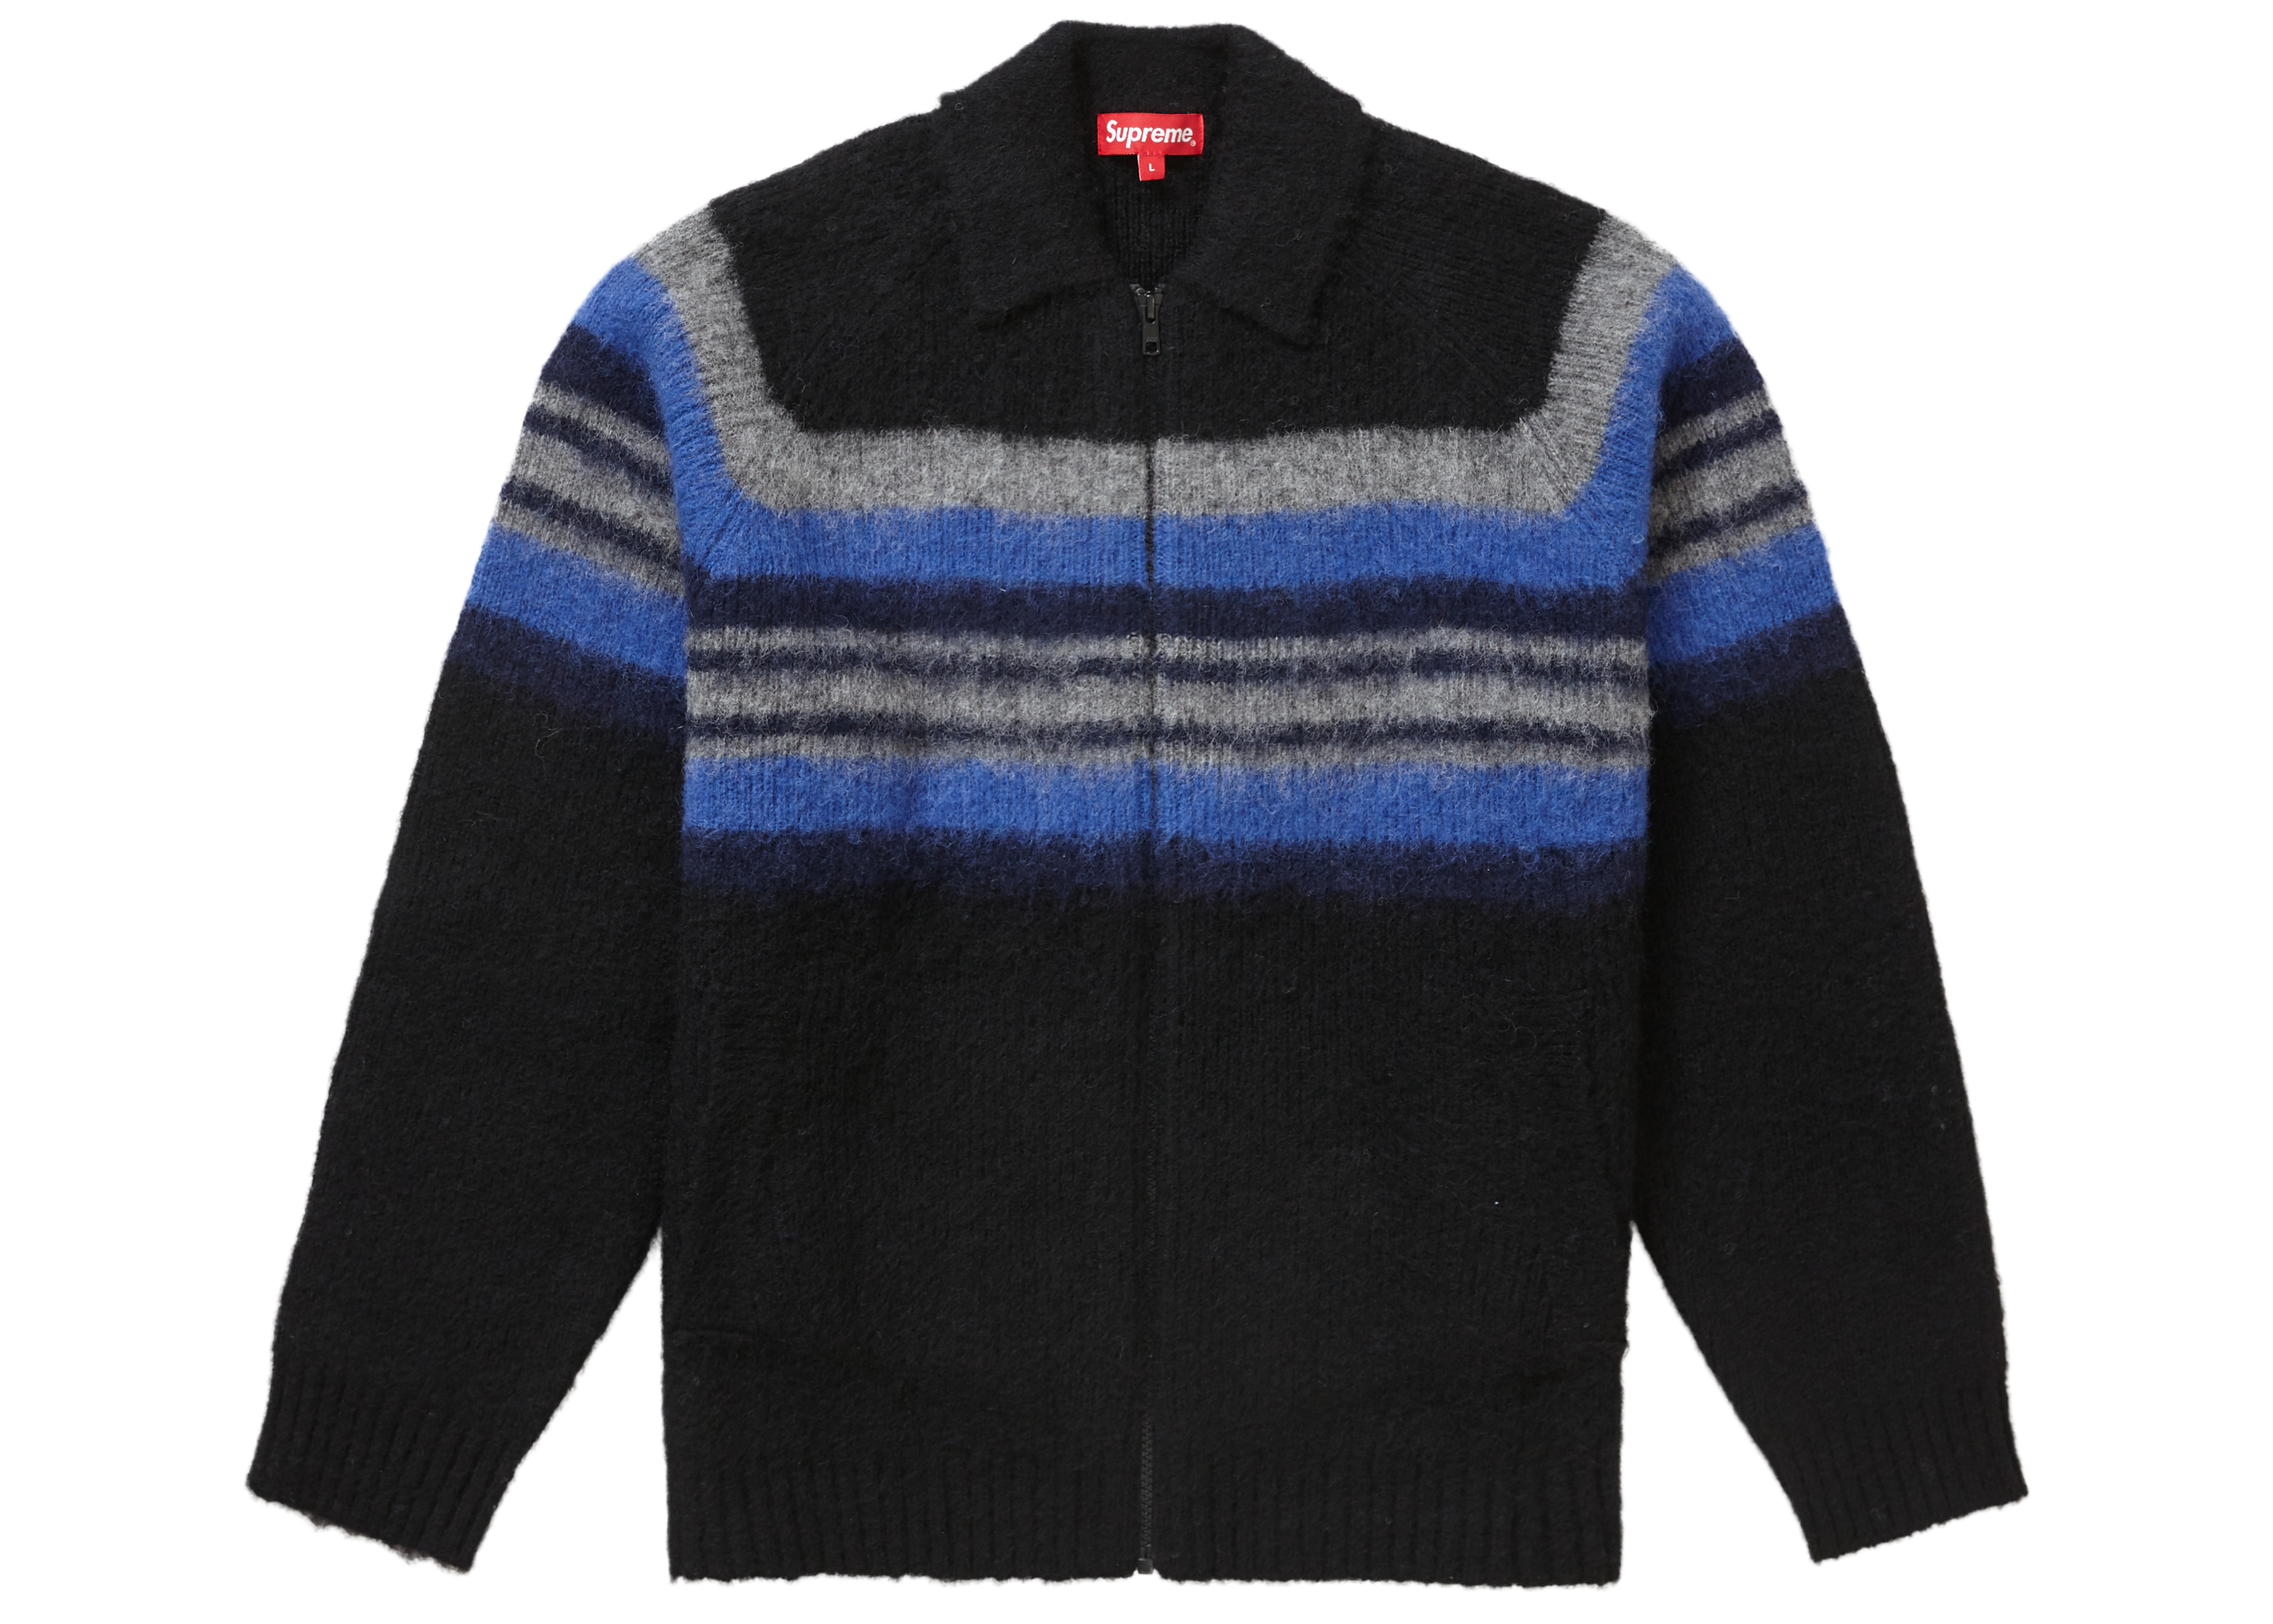 Supreme Brushed Wool Zip Up Sweater